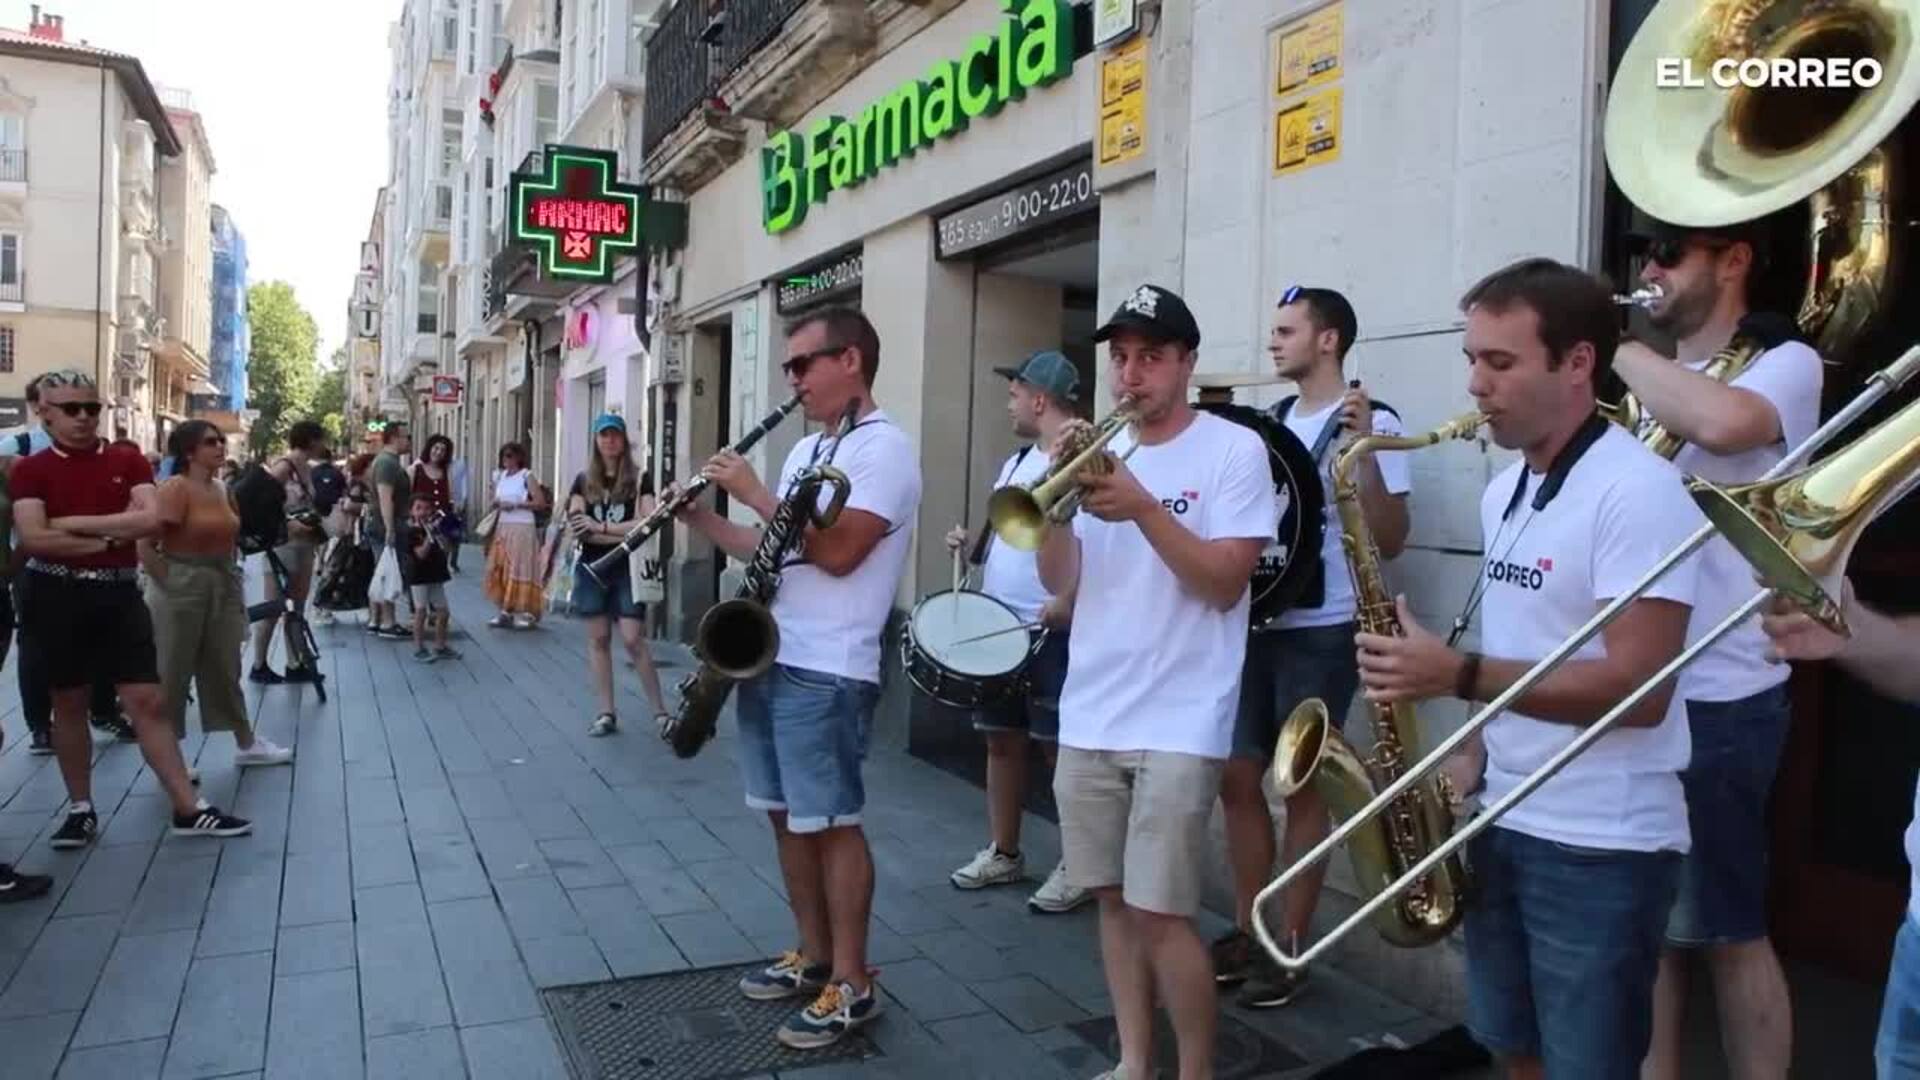 La Iruña Brass Band anima el centro de Vitoria